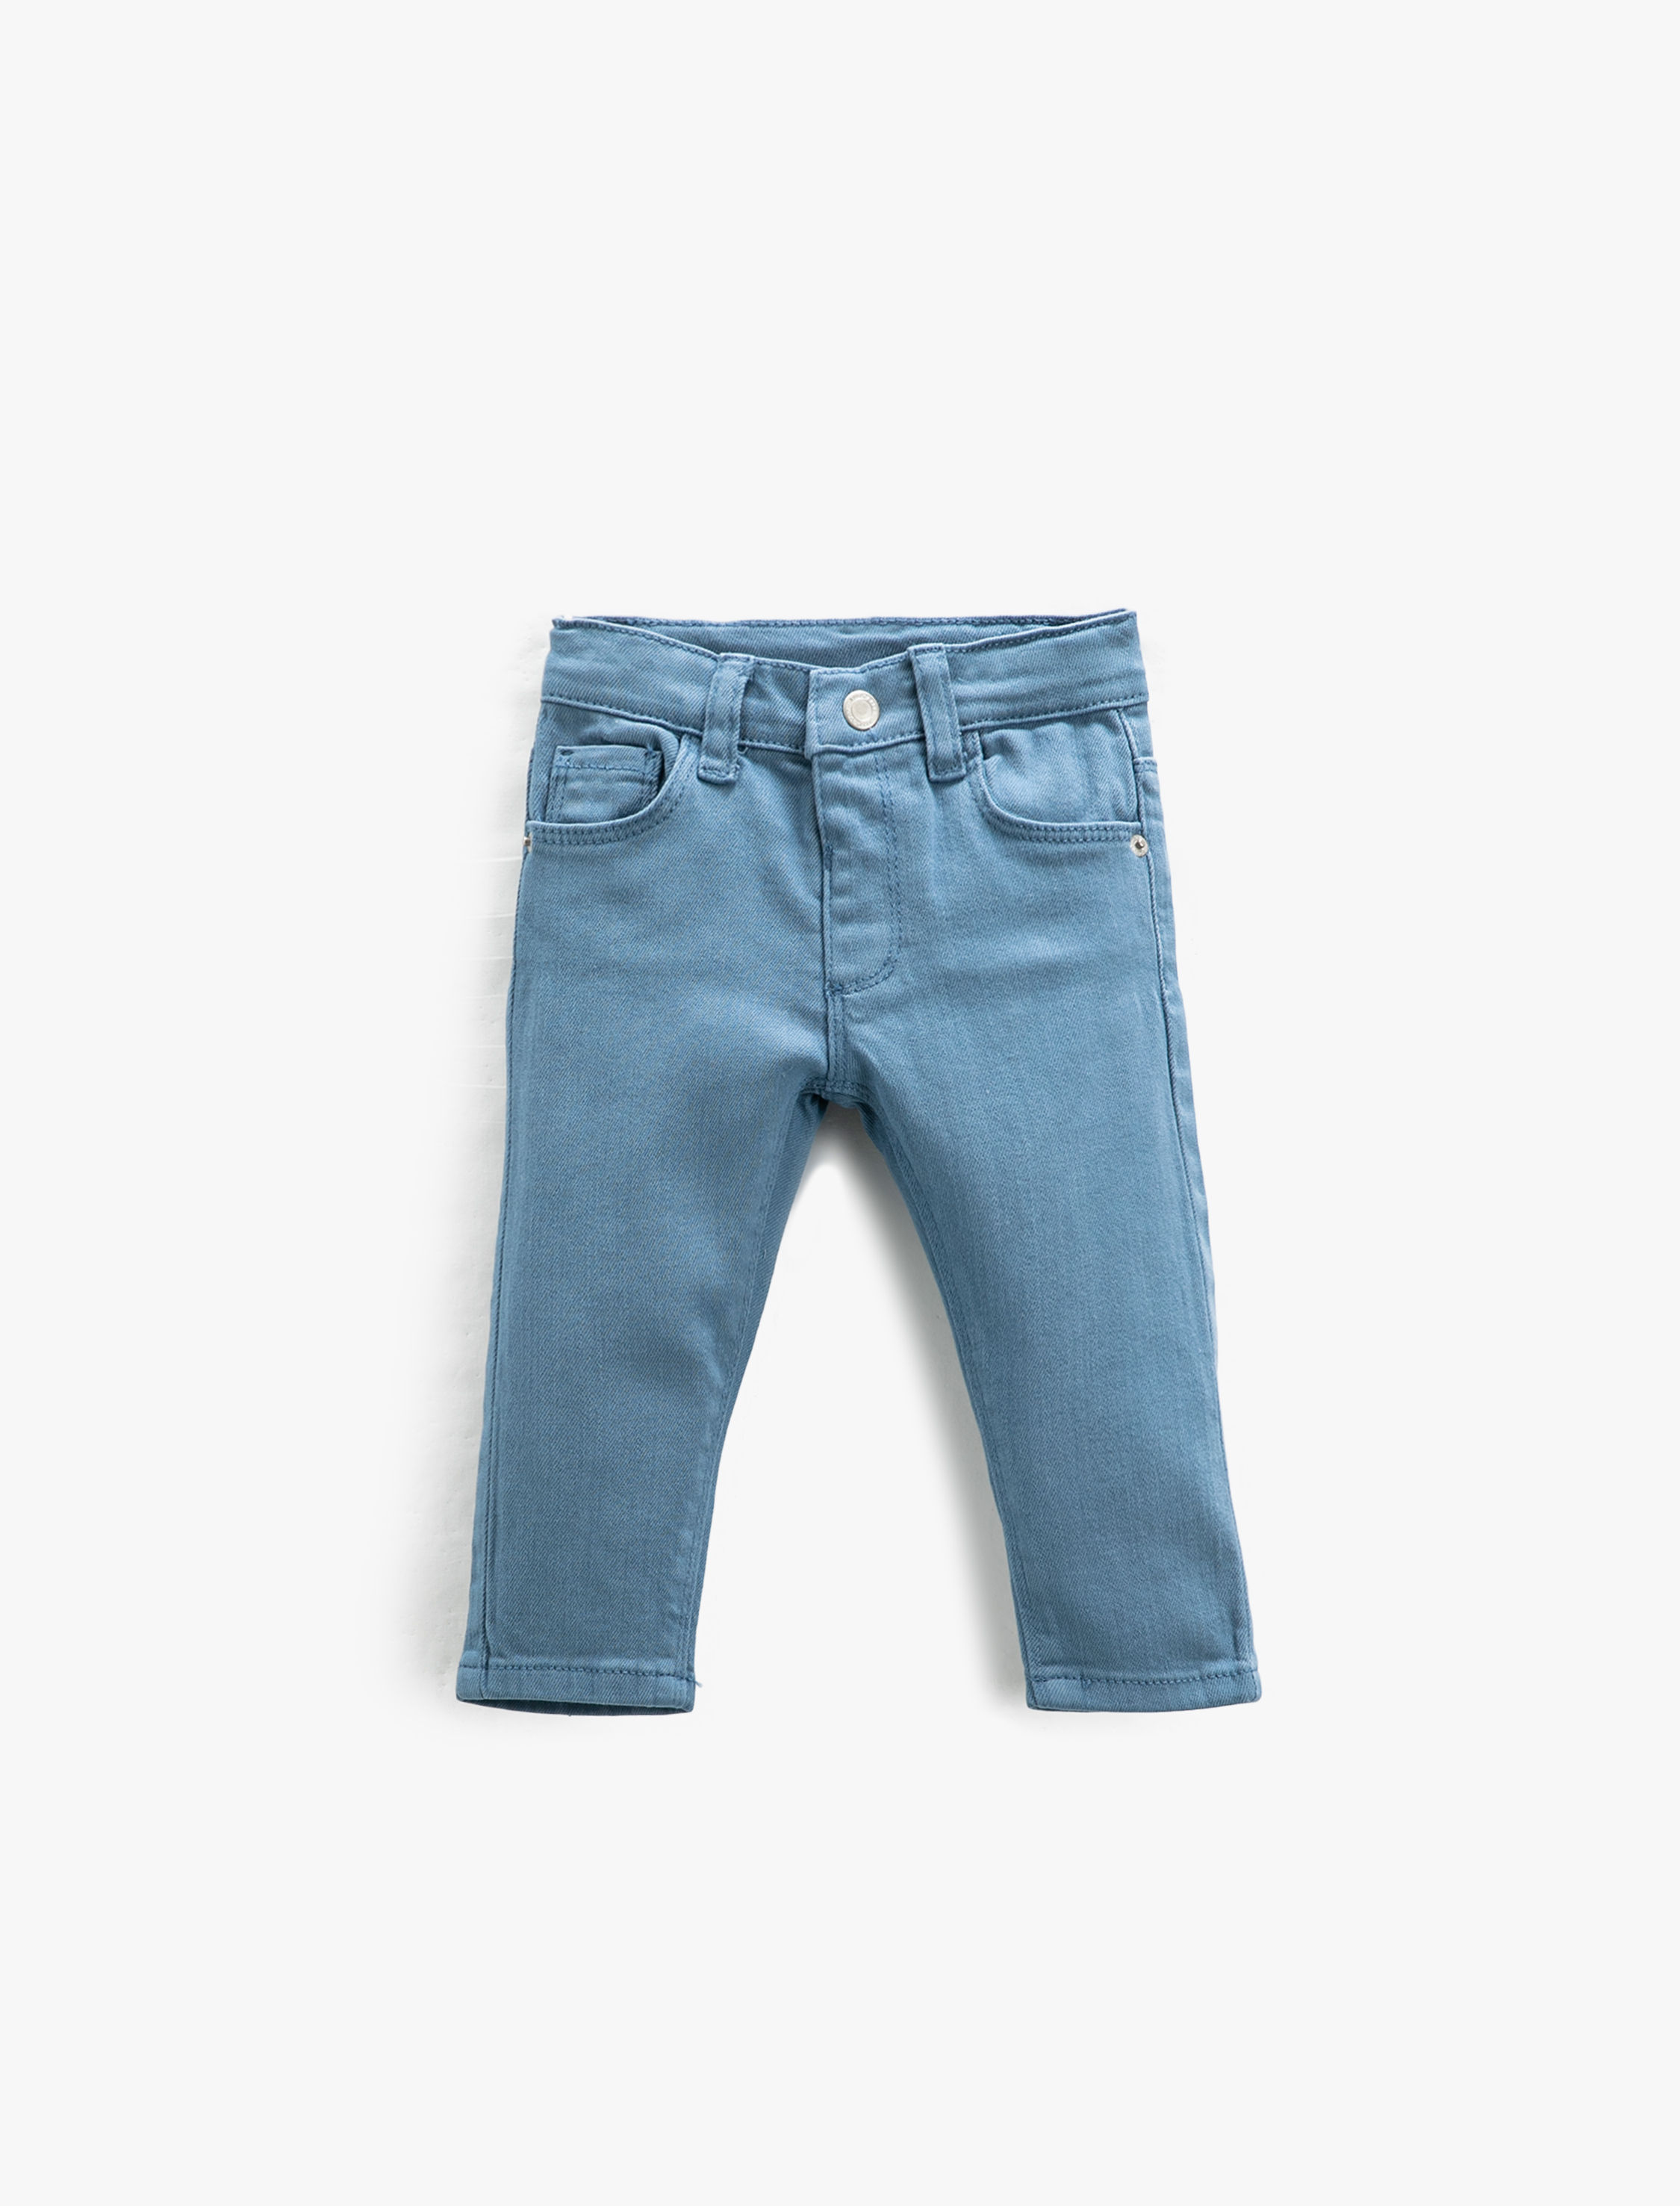 Koton Kot Pantolon Slim Fit Cepli Pamuklu Beli Ayarlanabilir Lastikli. 1